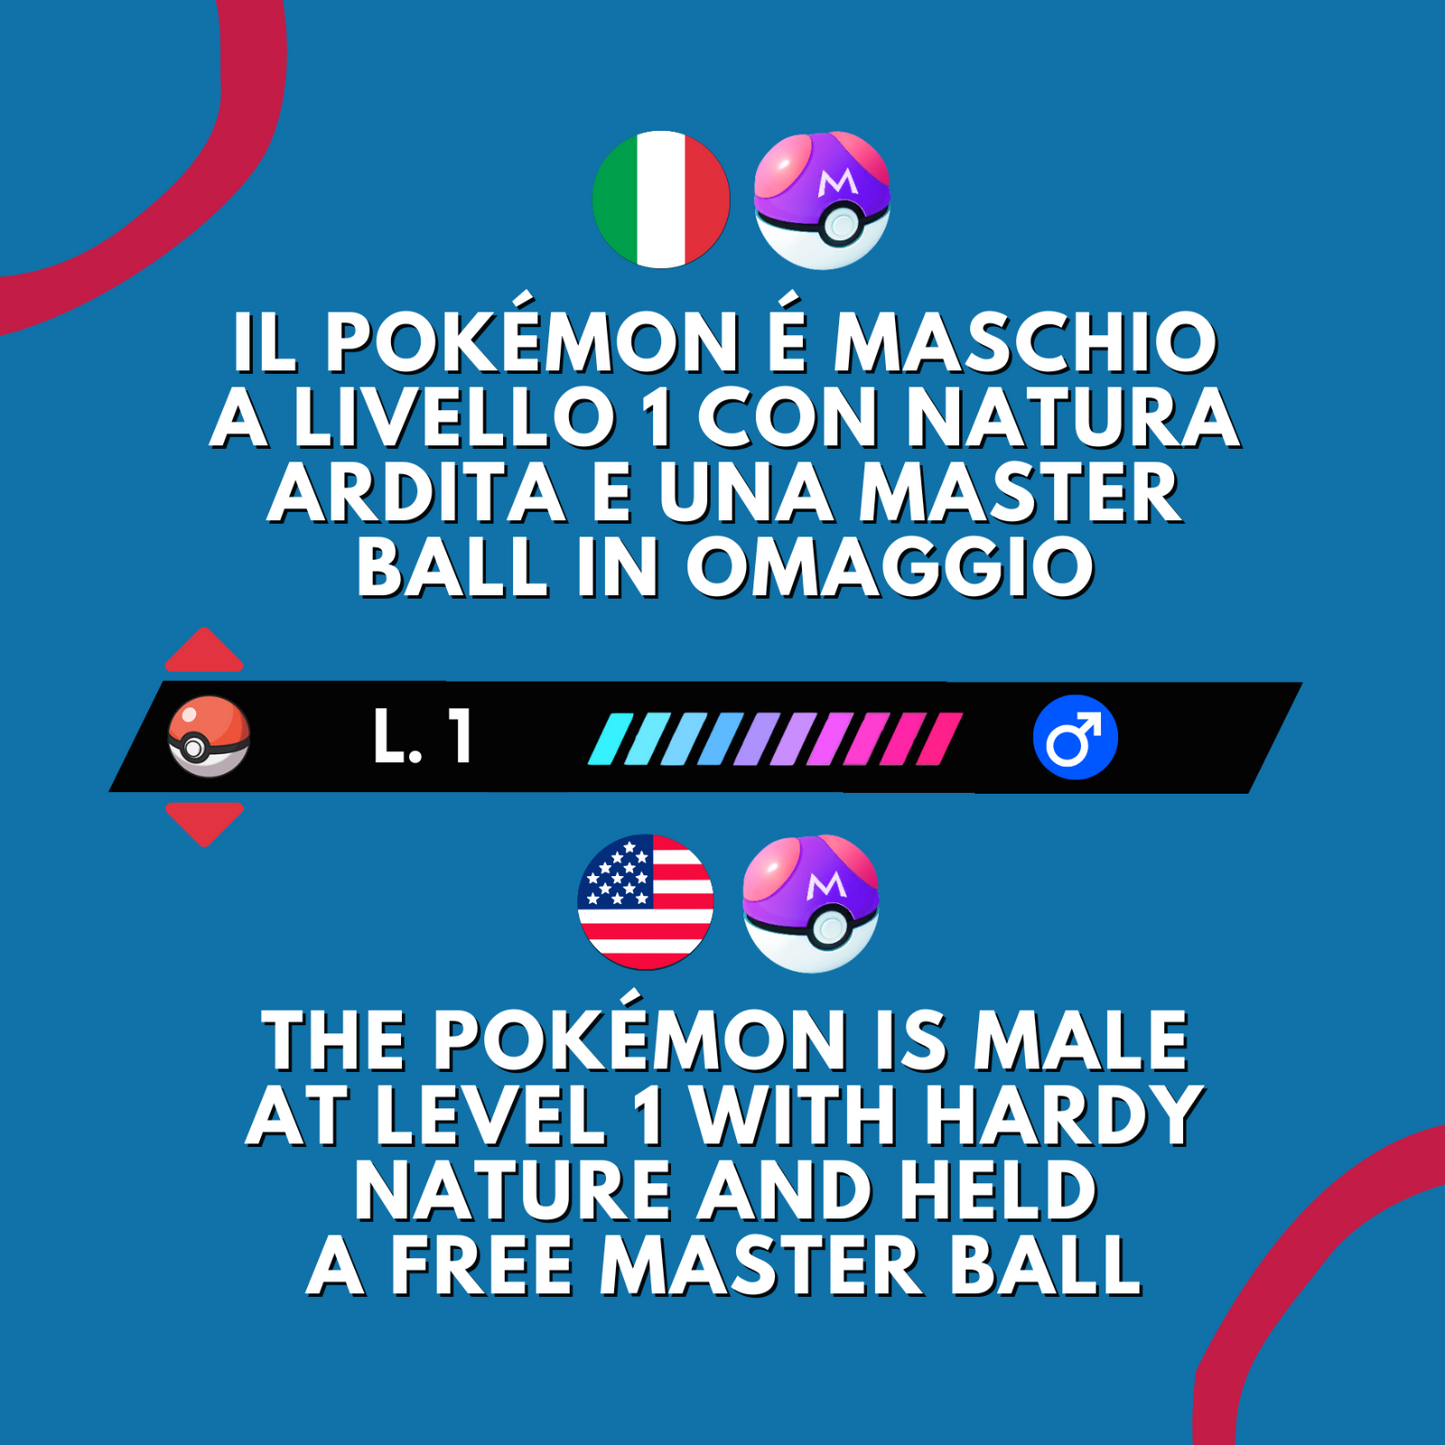 Elekid Shiny o Non 6 IV e Master Ball Legit Pokemon Spada Scudo Sword Shield